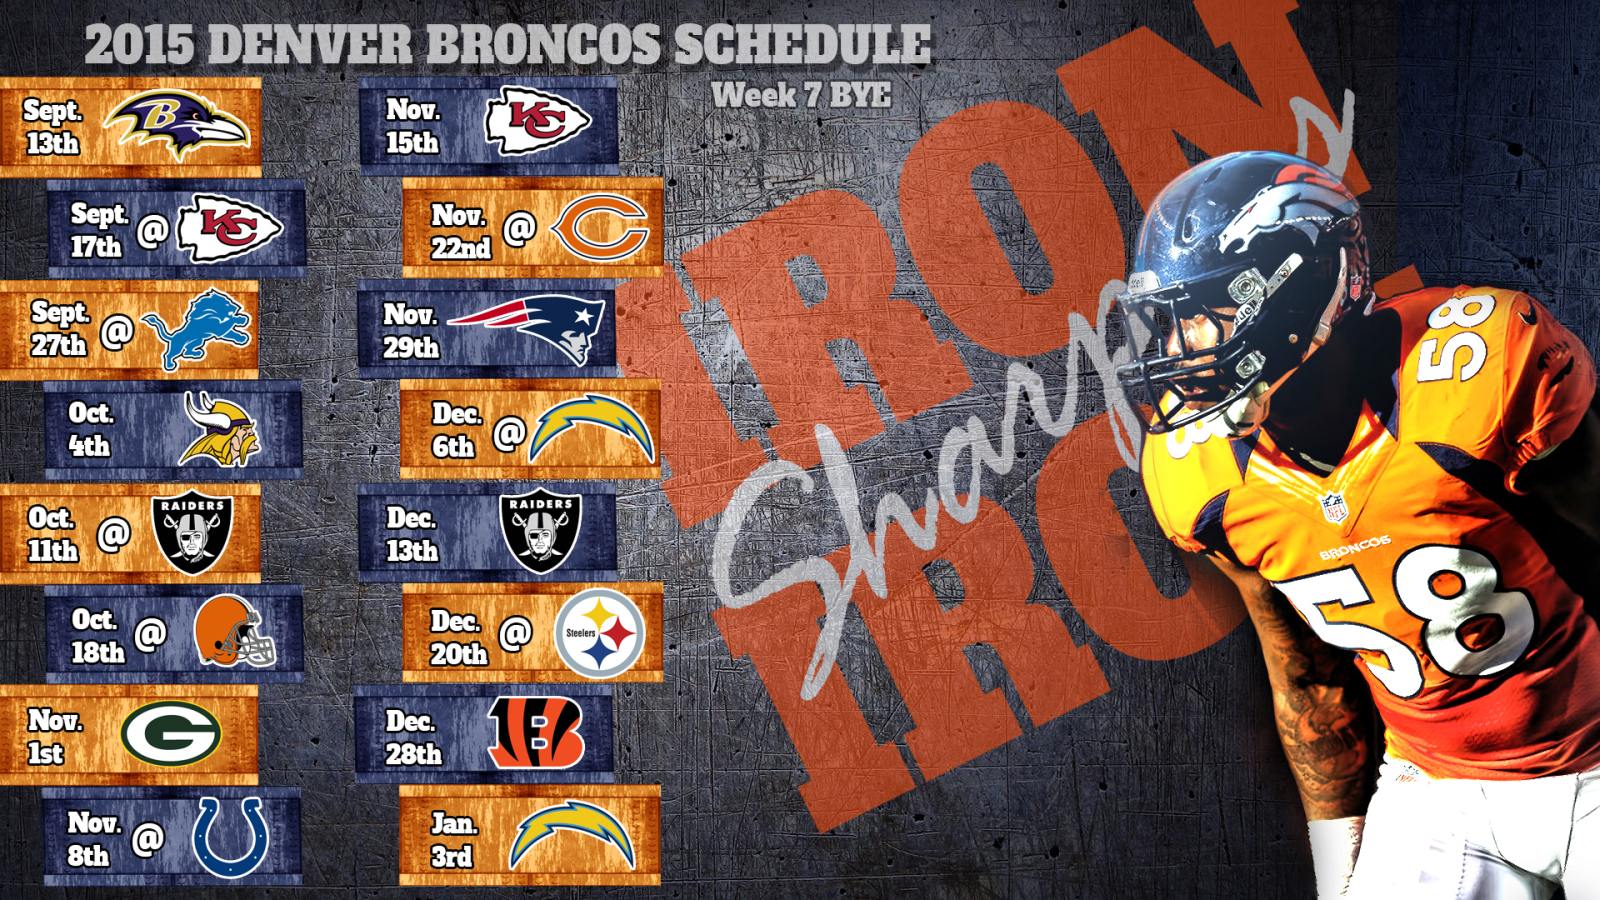 2015 Denver Broncos Schedule Wallpaper WallpaperSafari